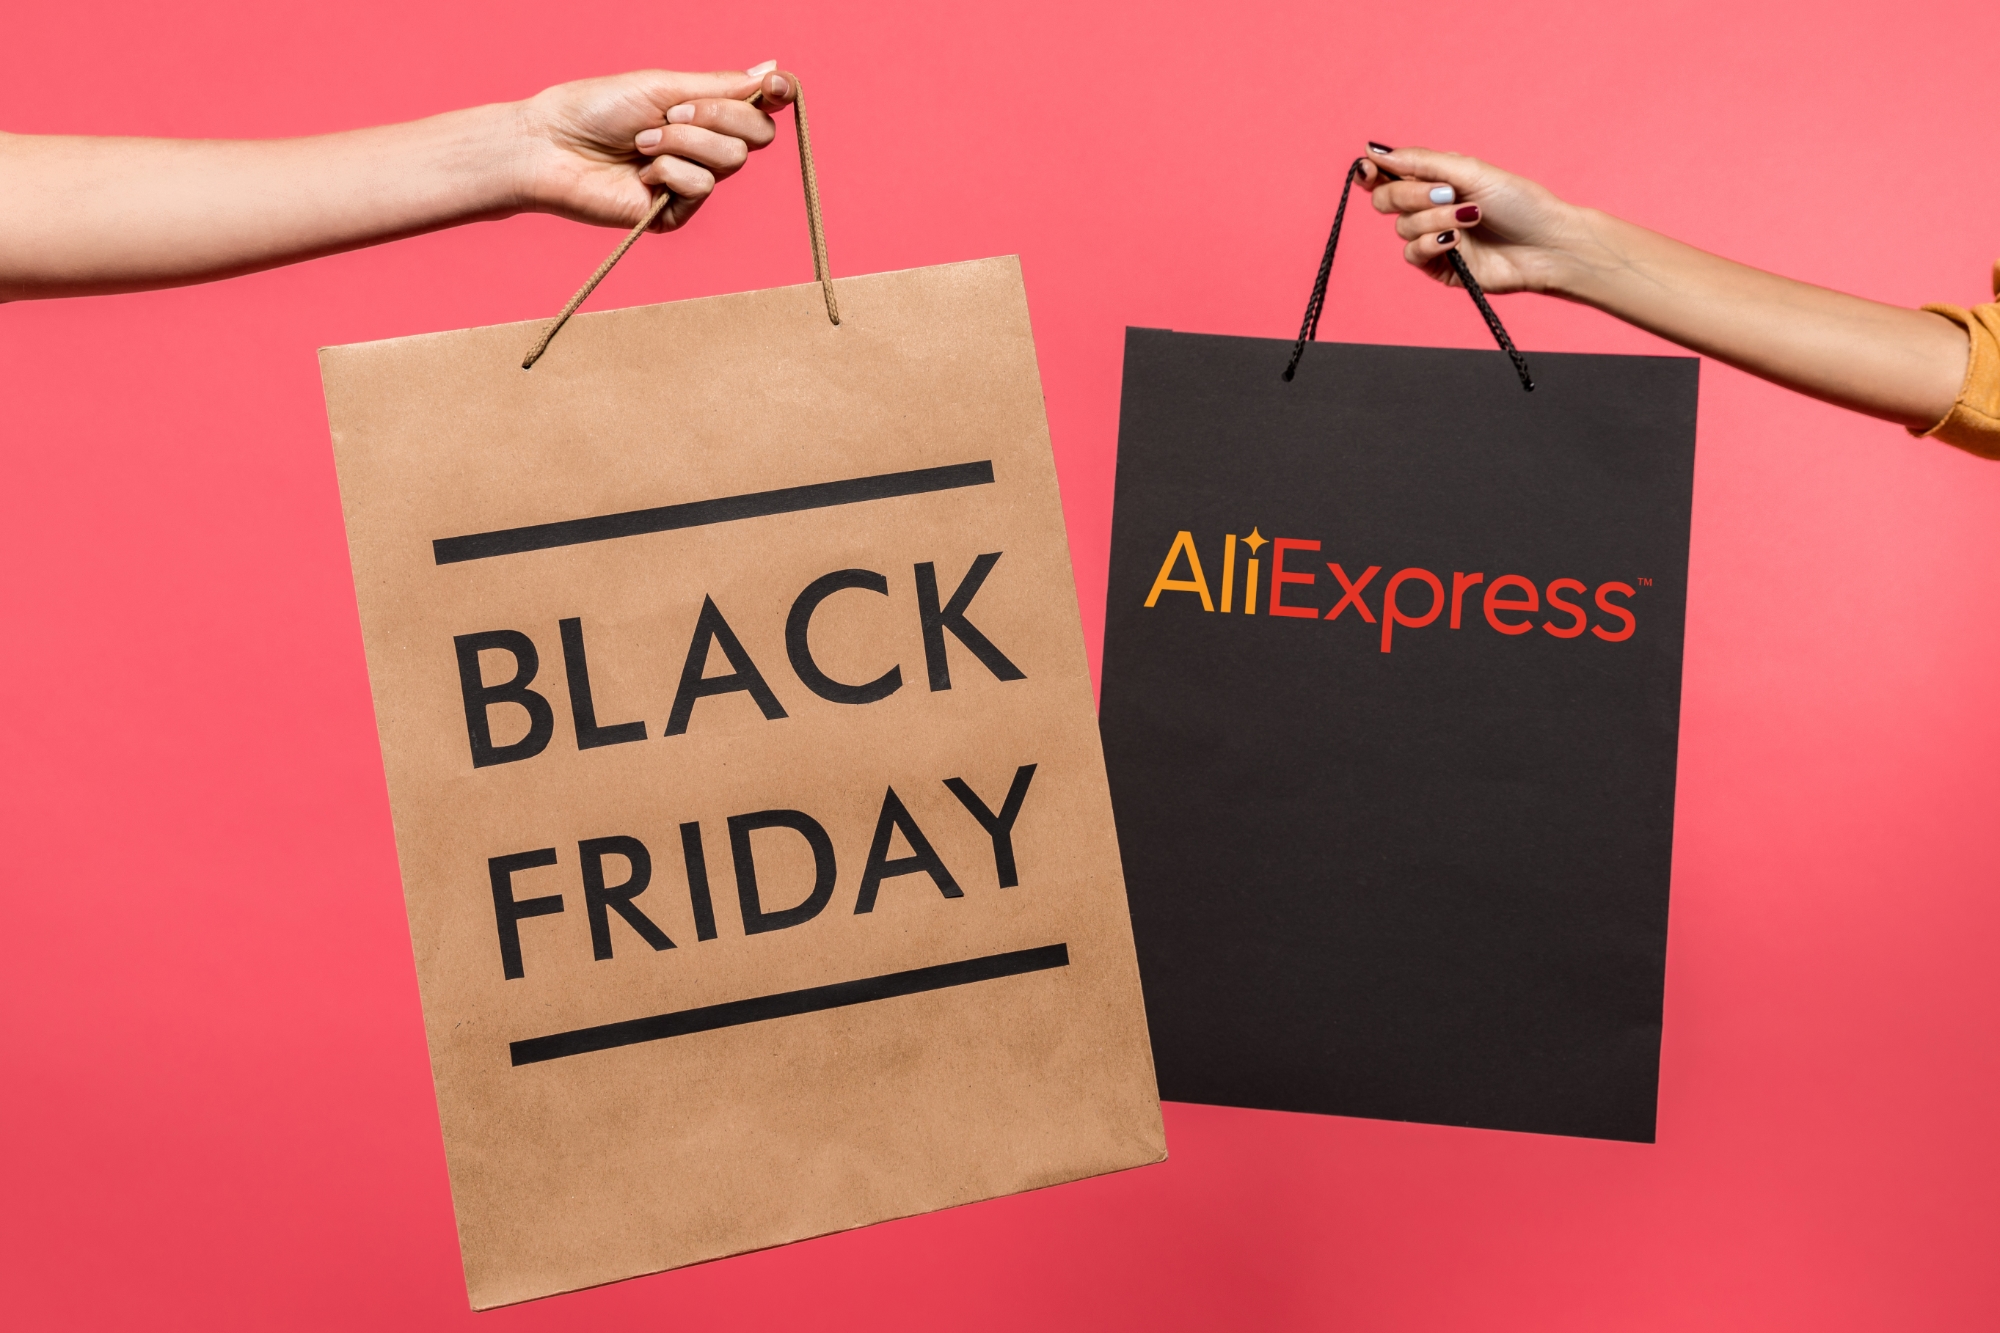 AliExpress Black Friday Shopping-Aktionscodes für Gagadget-Leser